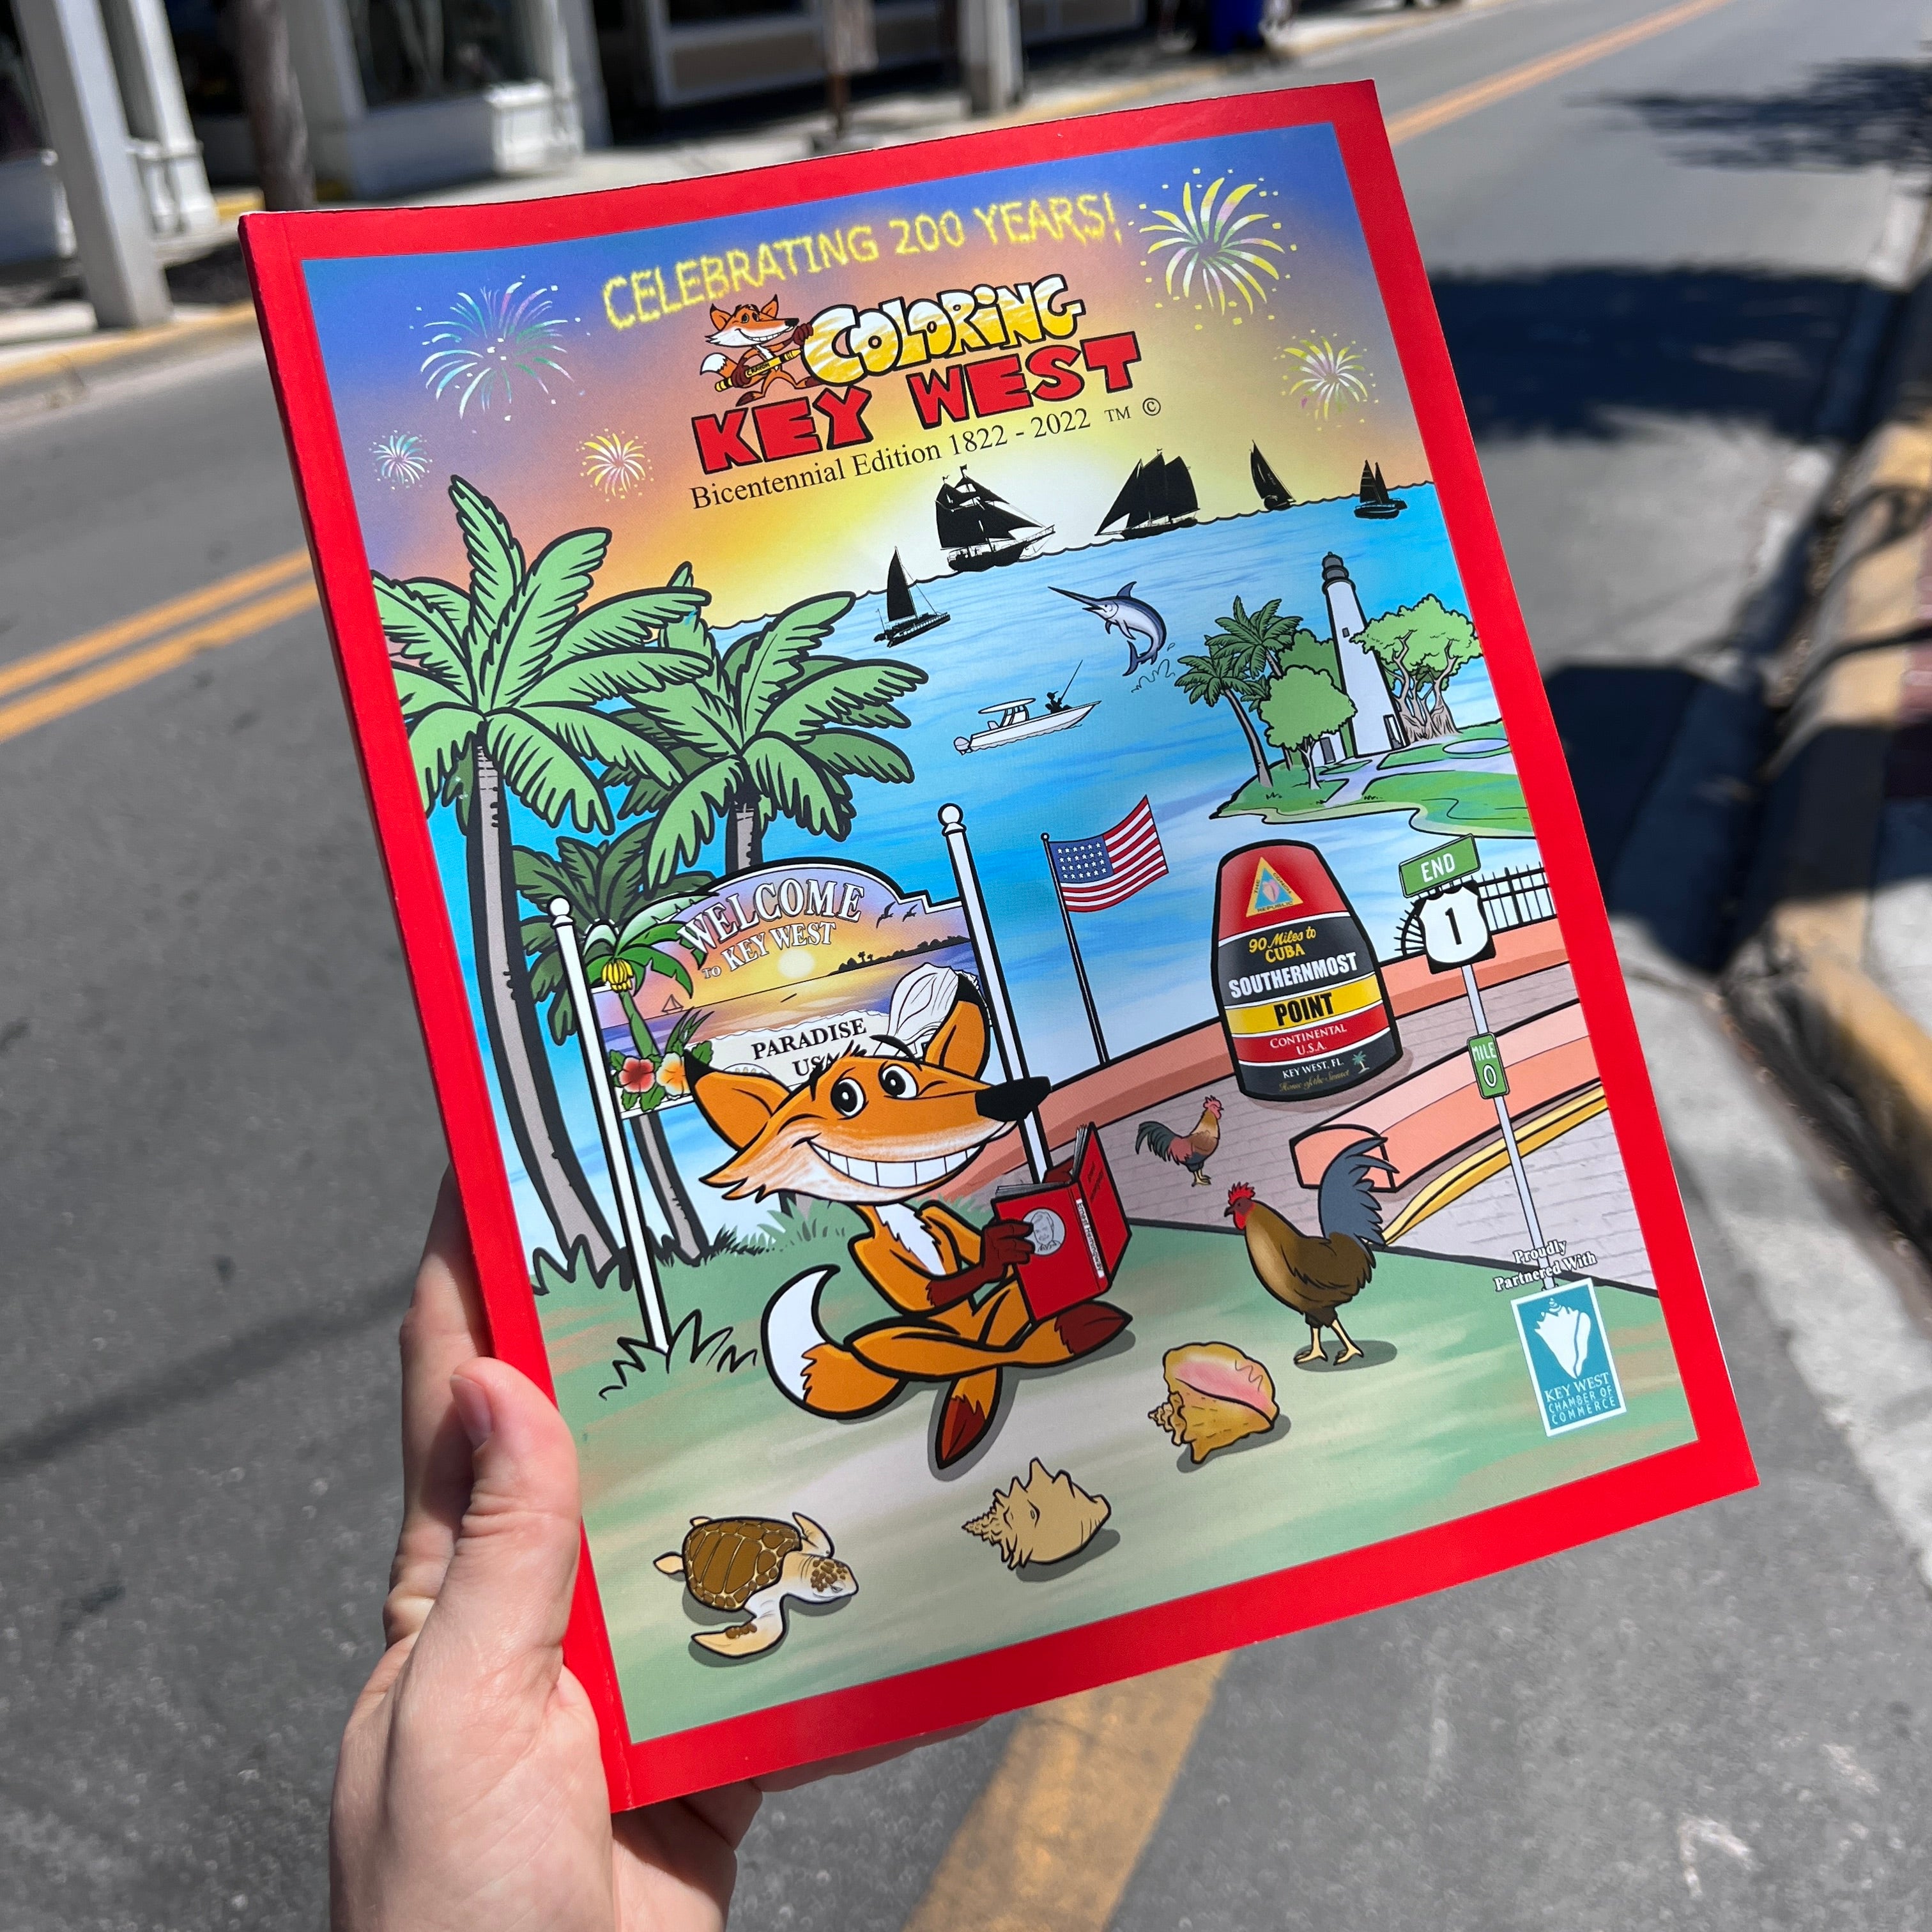 Key West Coloring Book Celebration Bicential